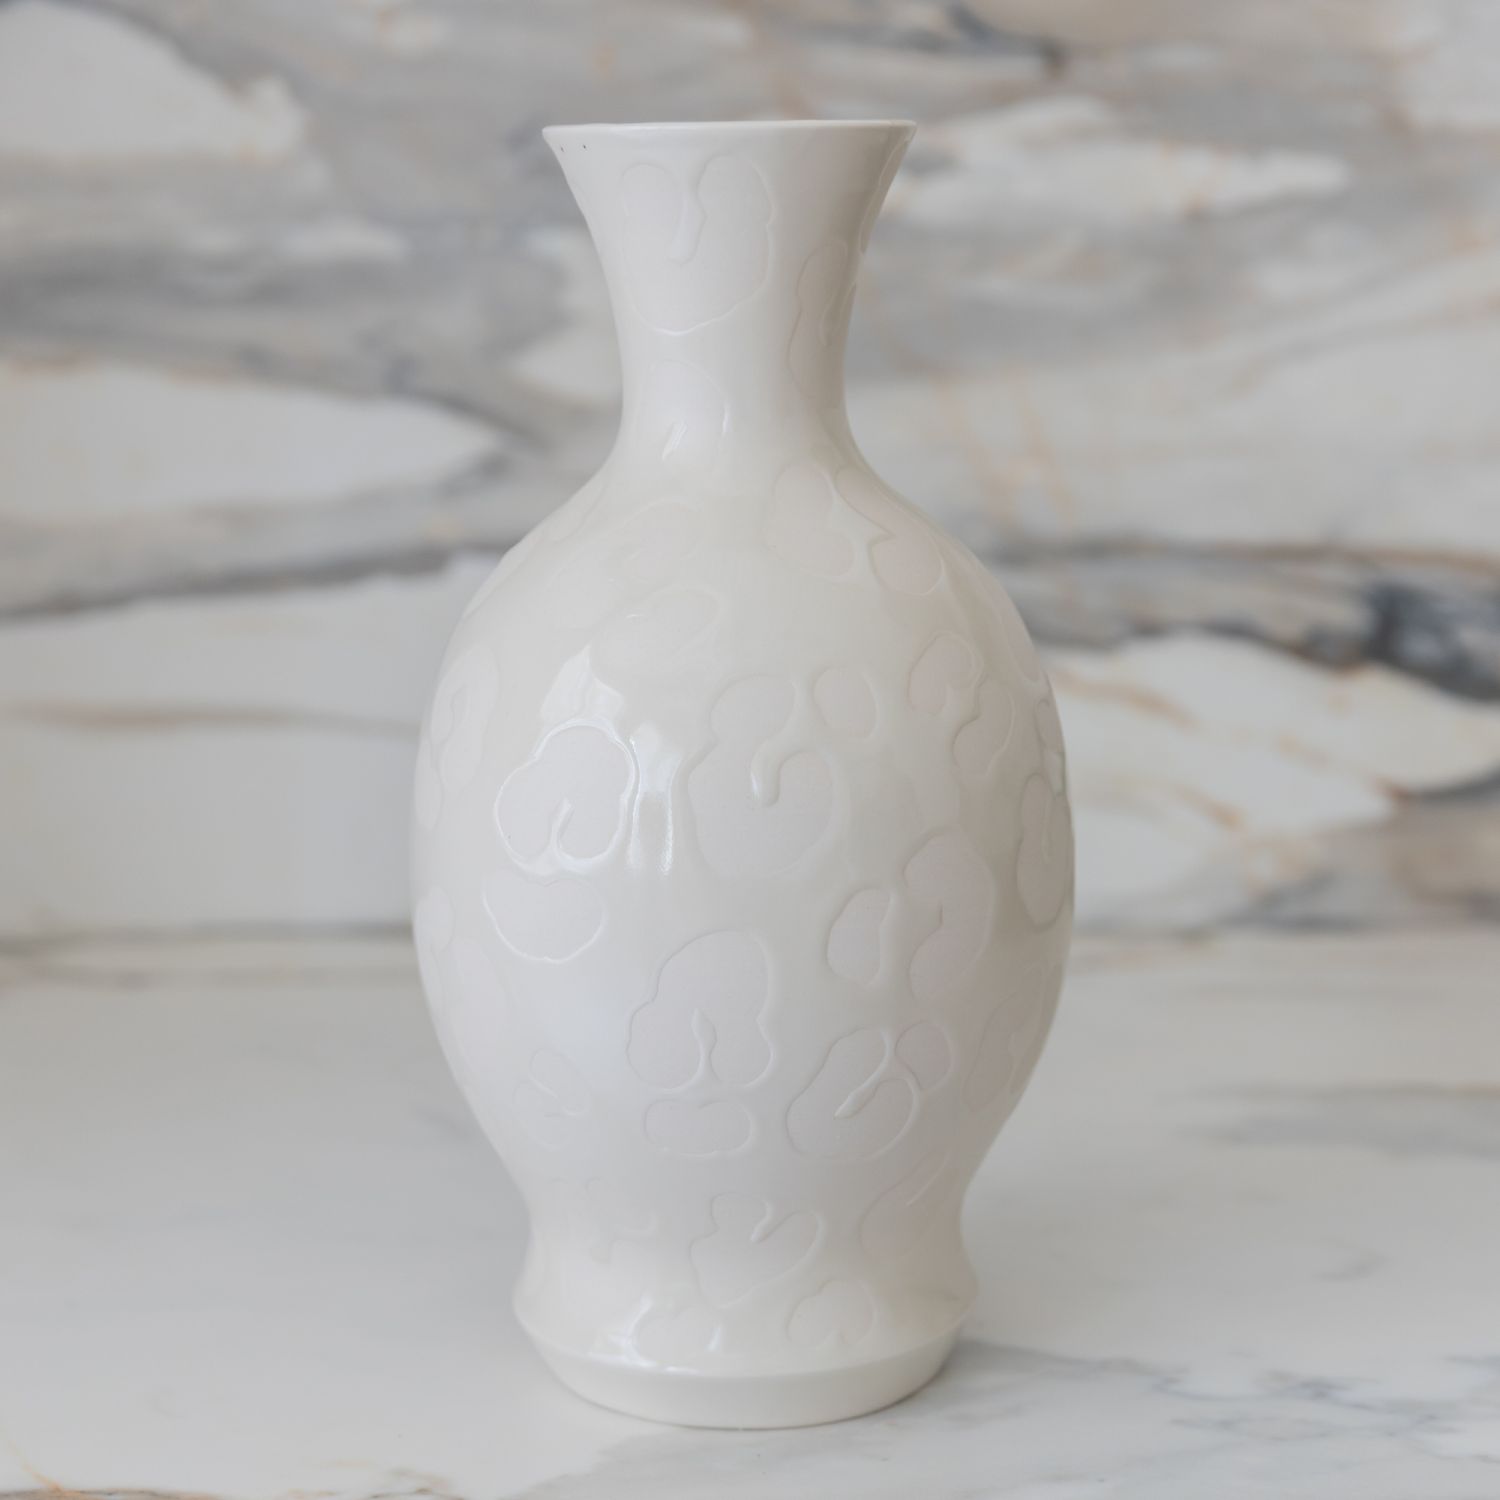 Mima Ceramics: White Print Vessel no. 3 Product Image 1 of 3